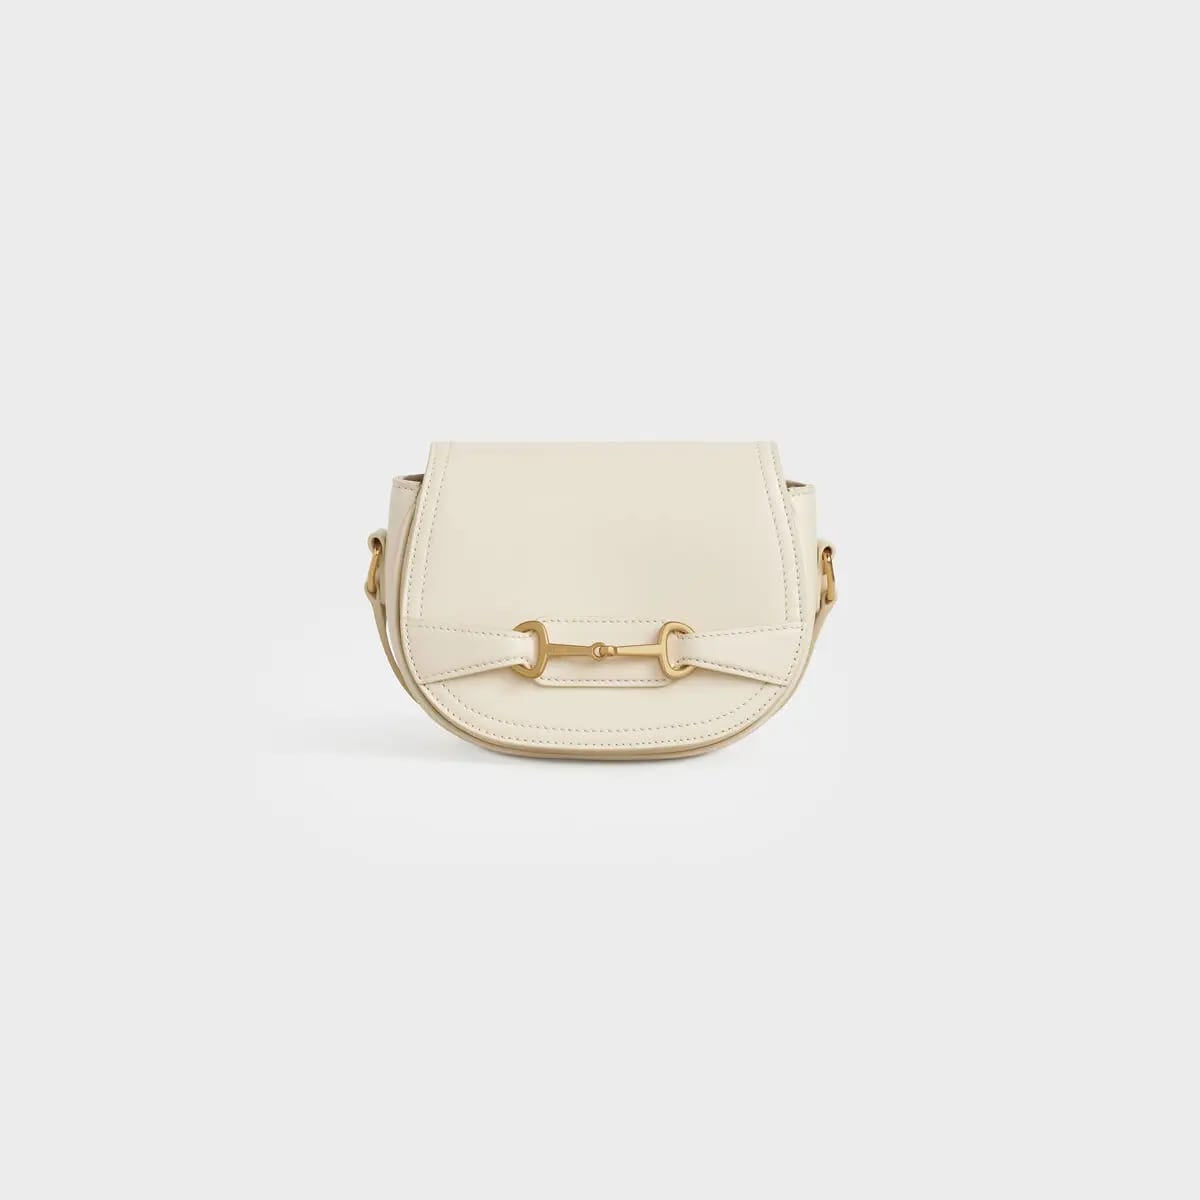 CELINE white Crecy bag RRP: £1250